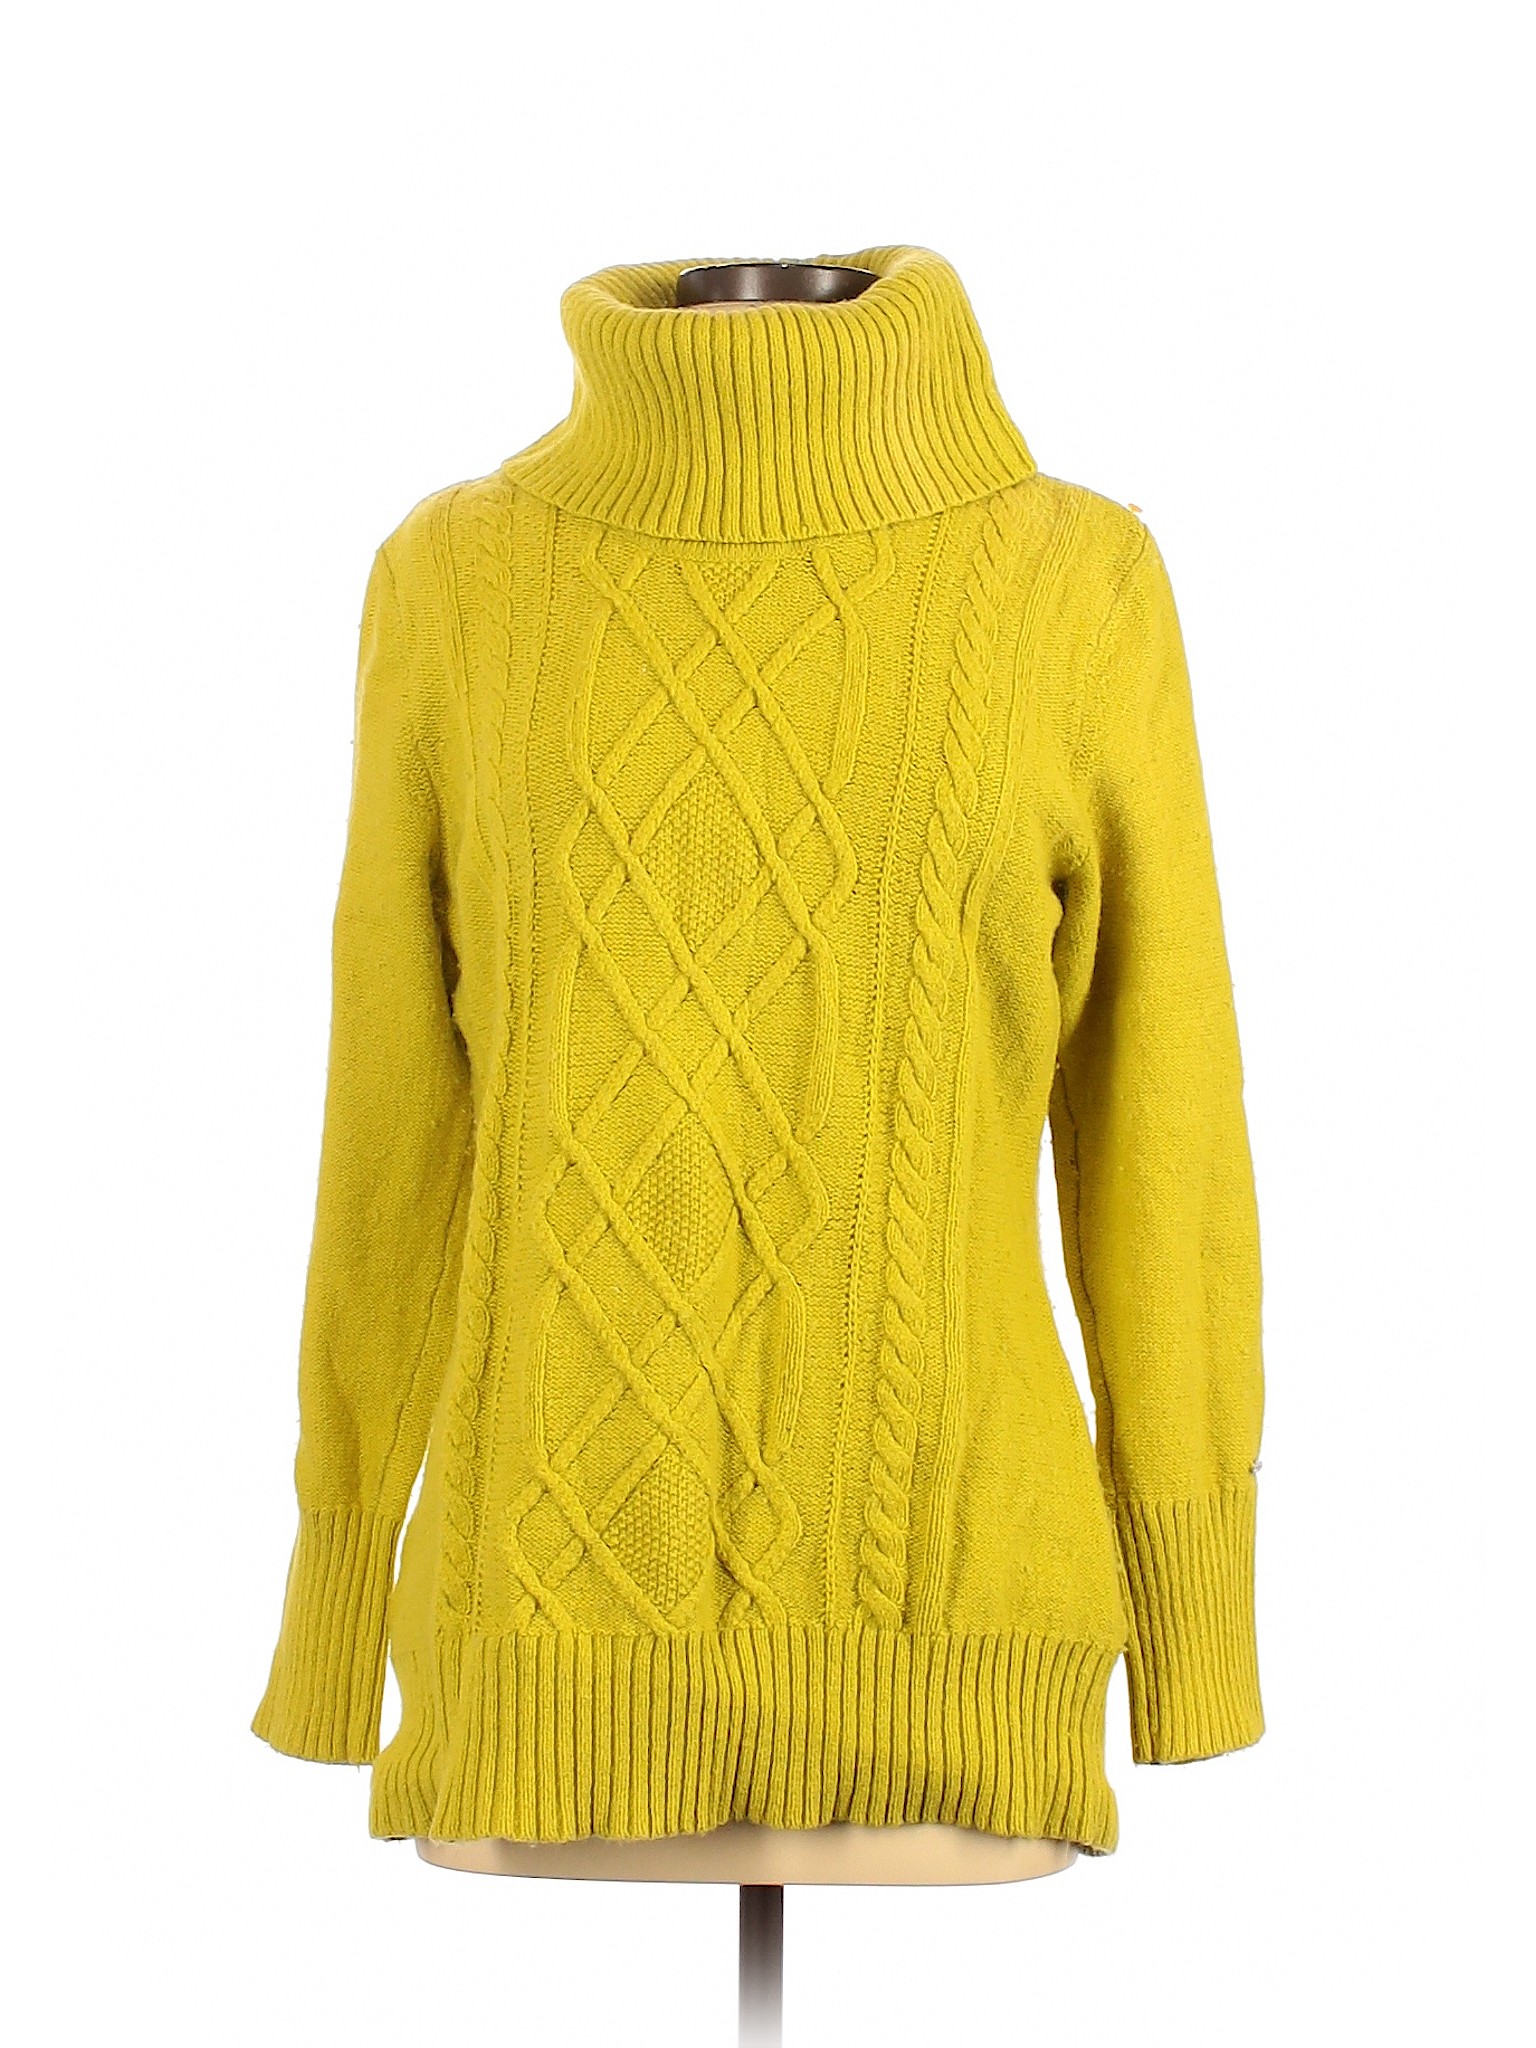 Cabela's Women Yellow Turtleneck Sweater L | eBay